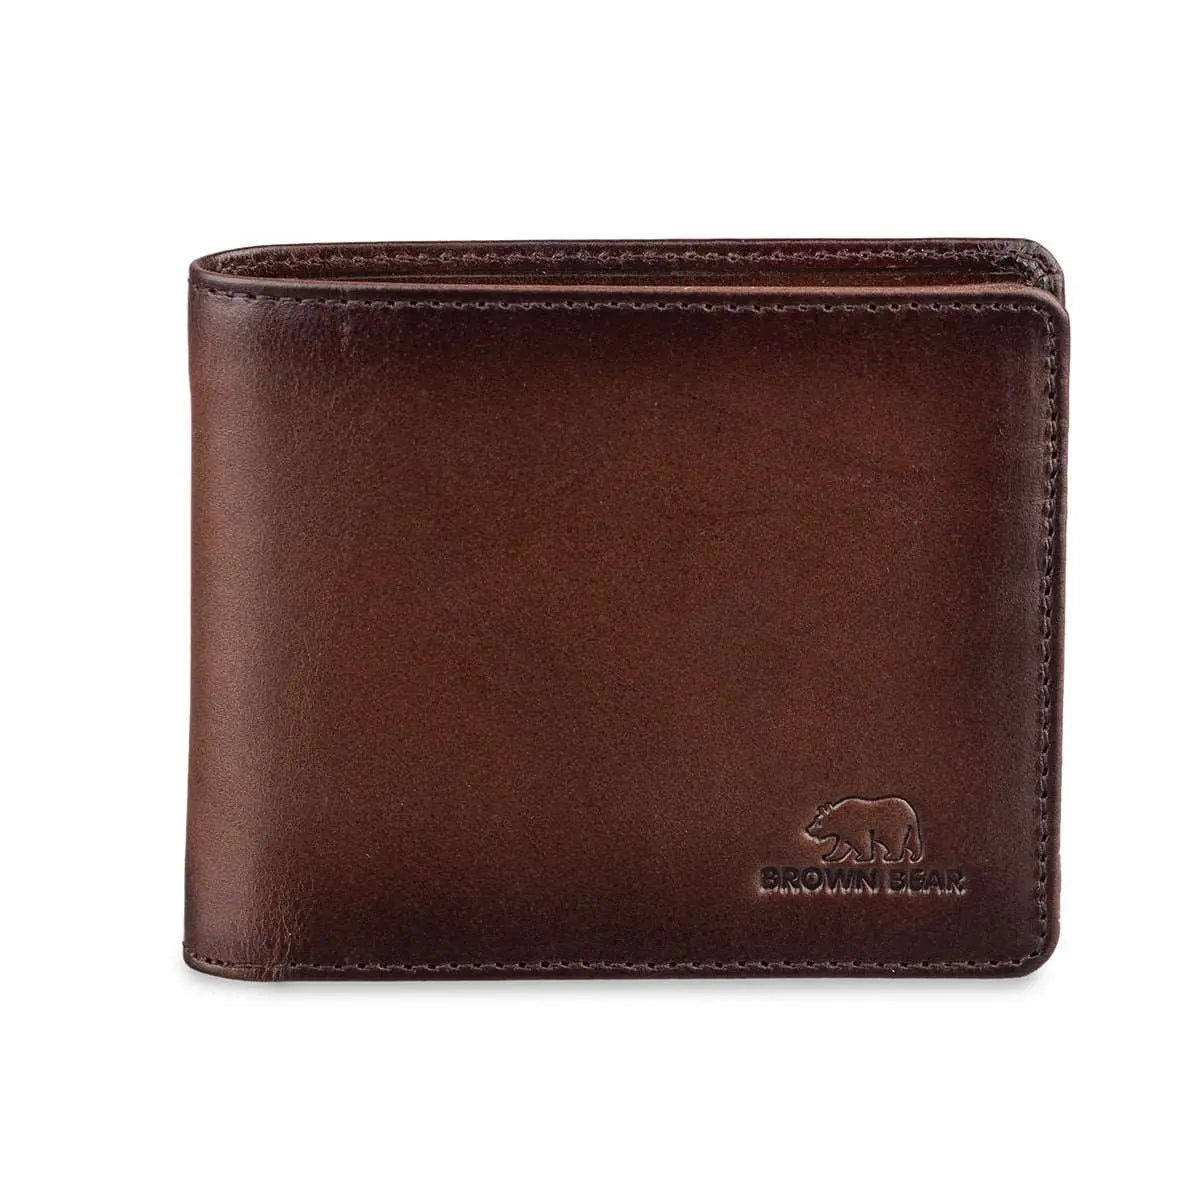 PU Leather Male Leather Purse Large Capacity Pocket Purse Outdoor | eBay